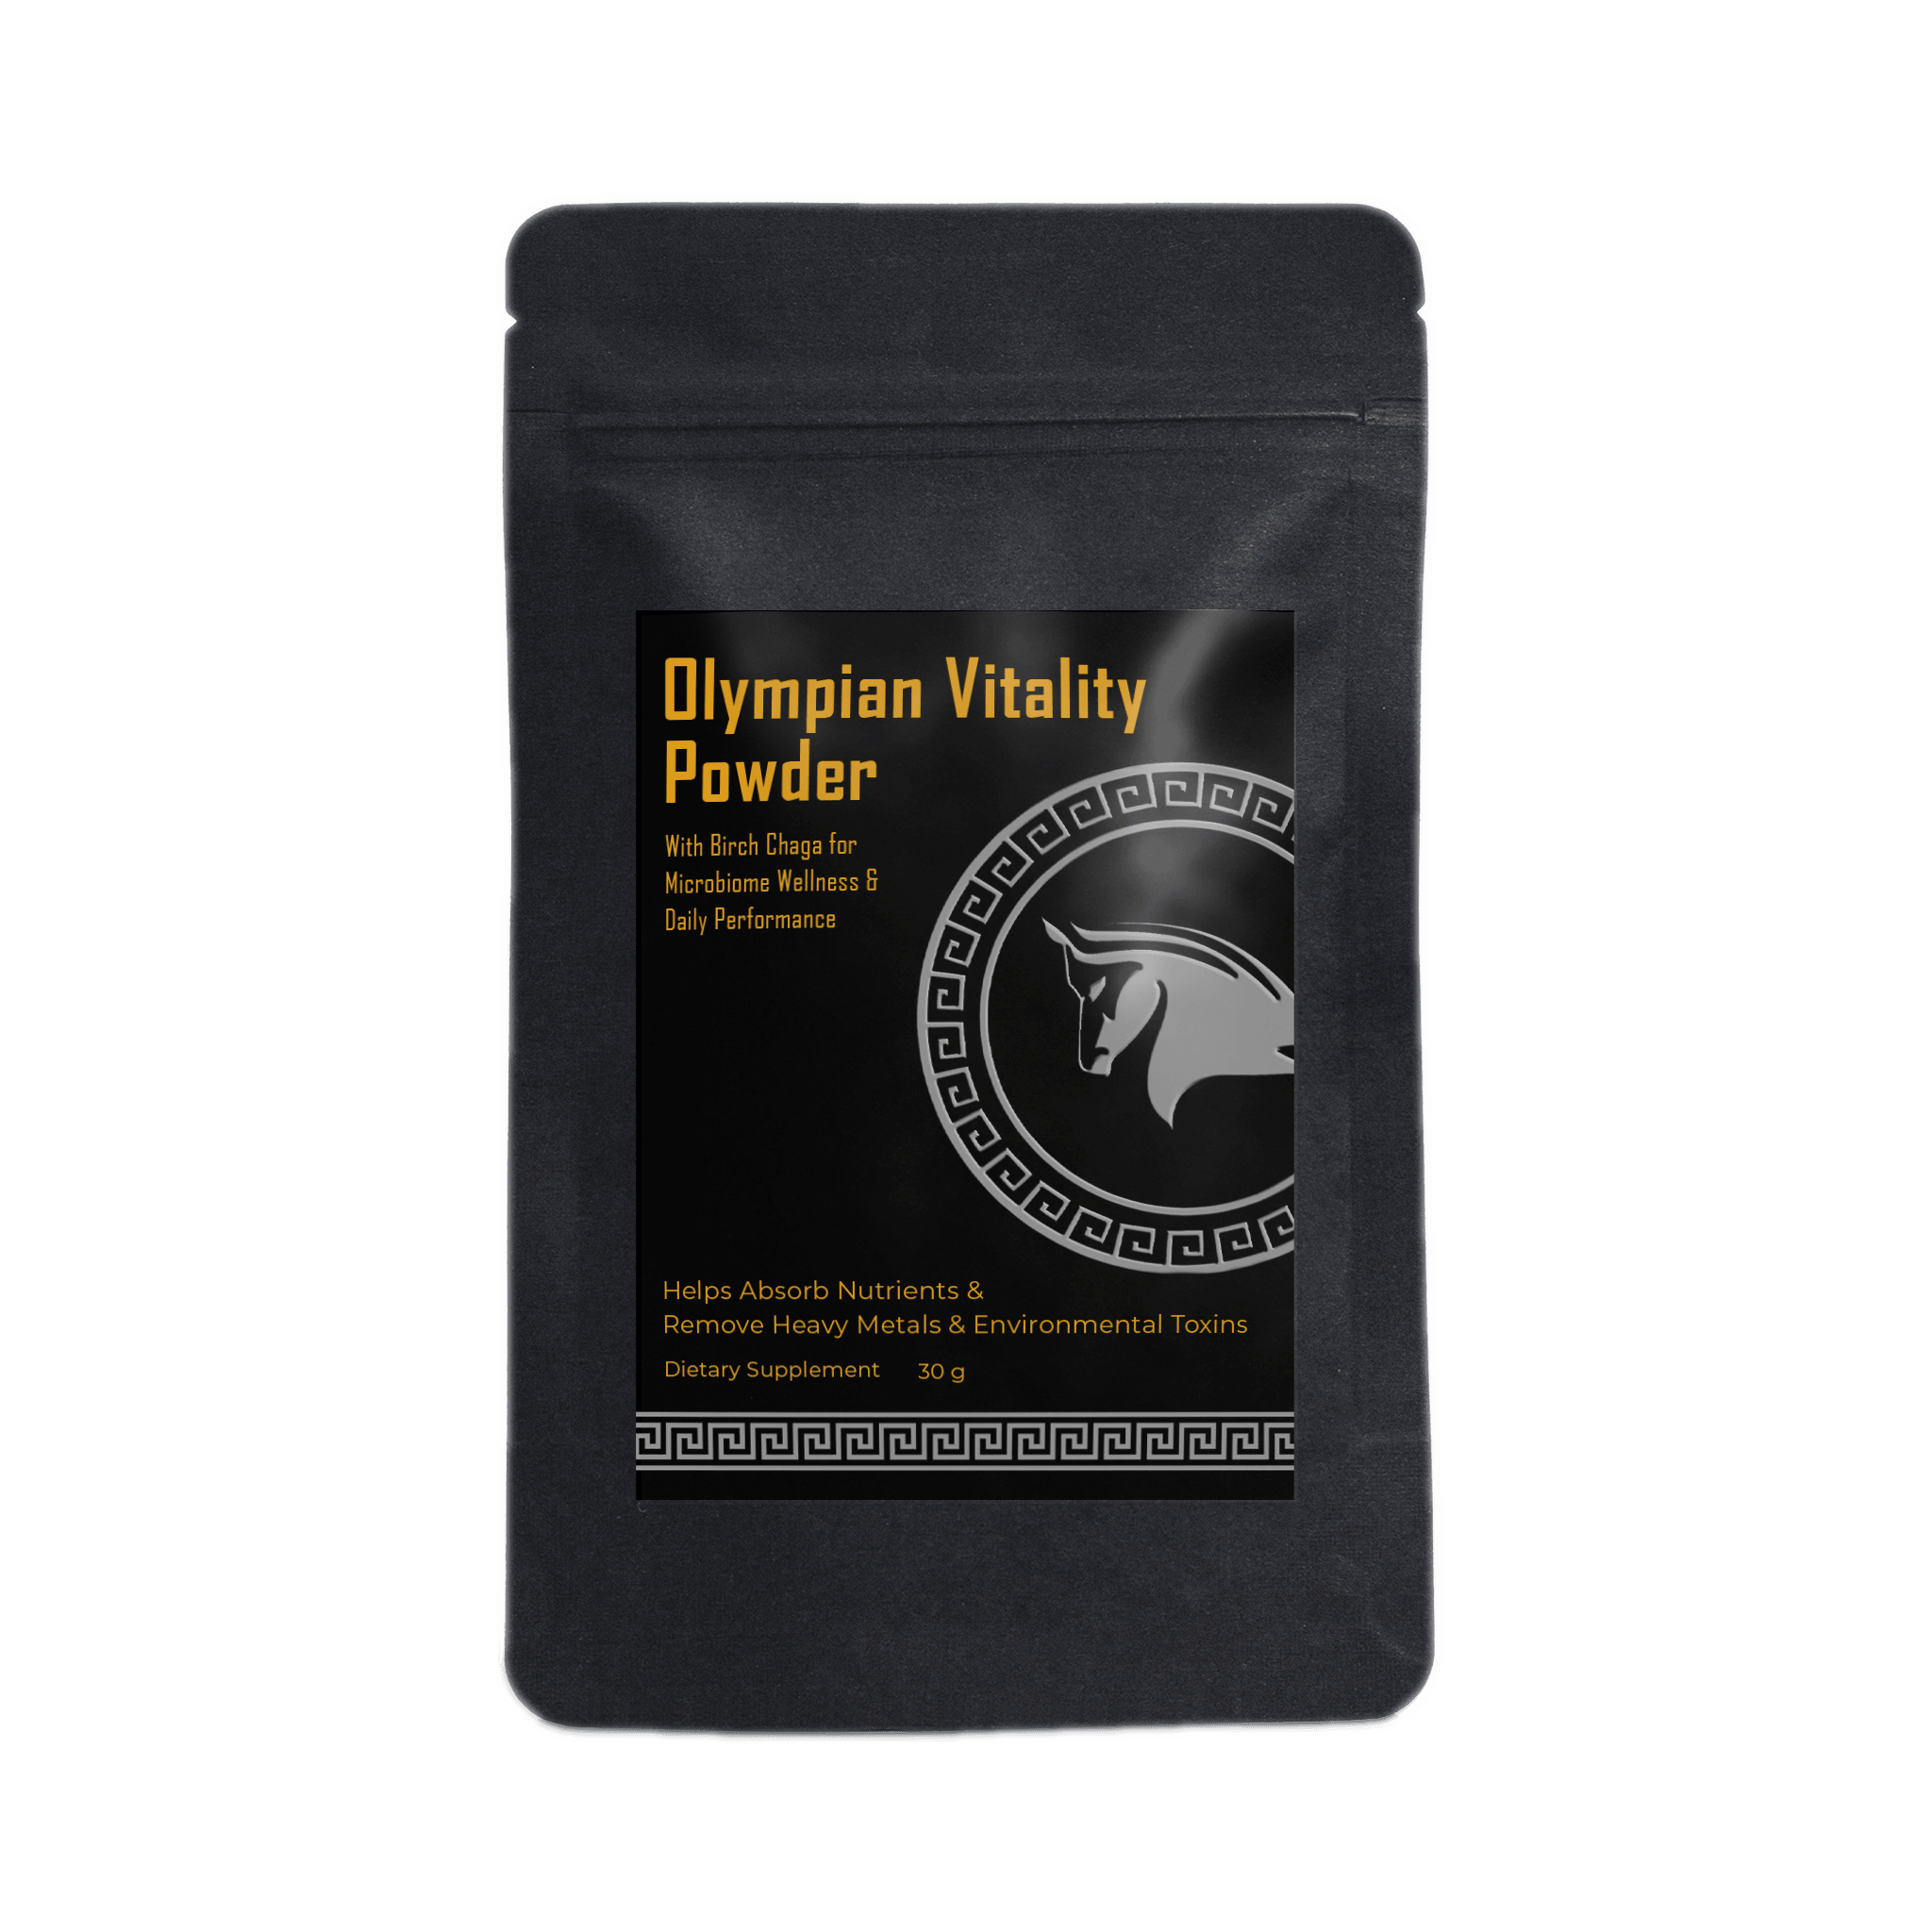 Olympian Vitality Powder (2 Month Supply) bag